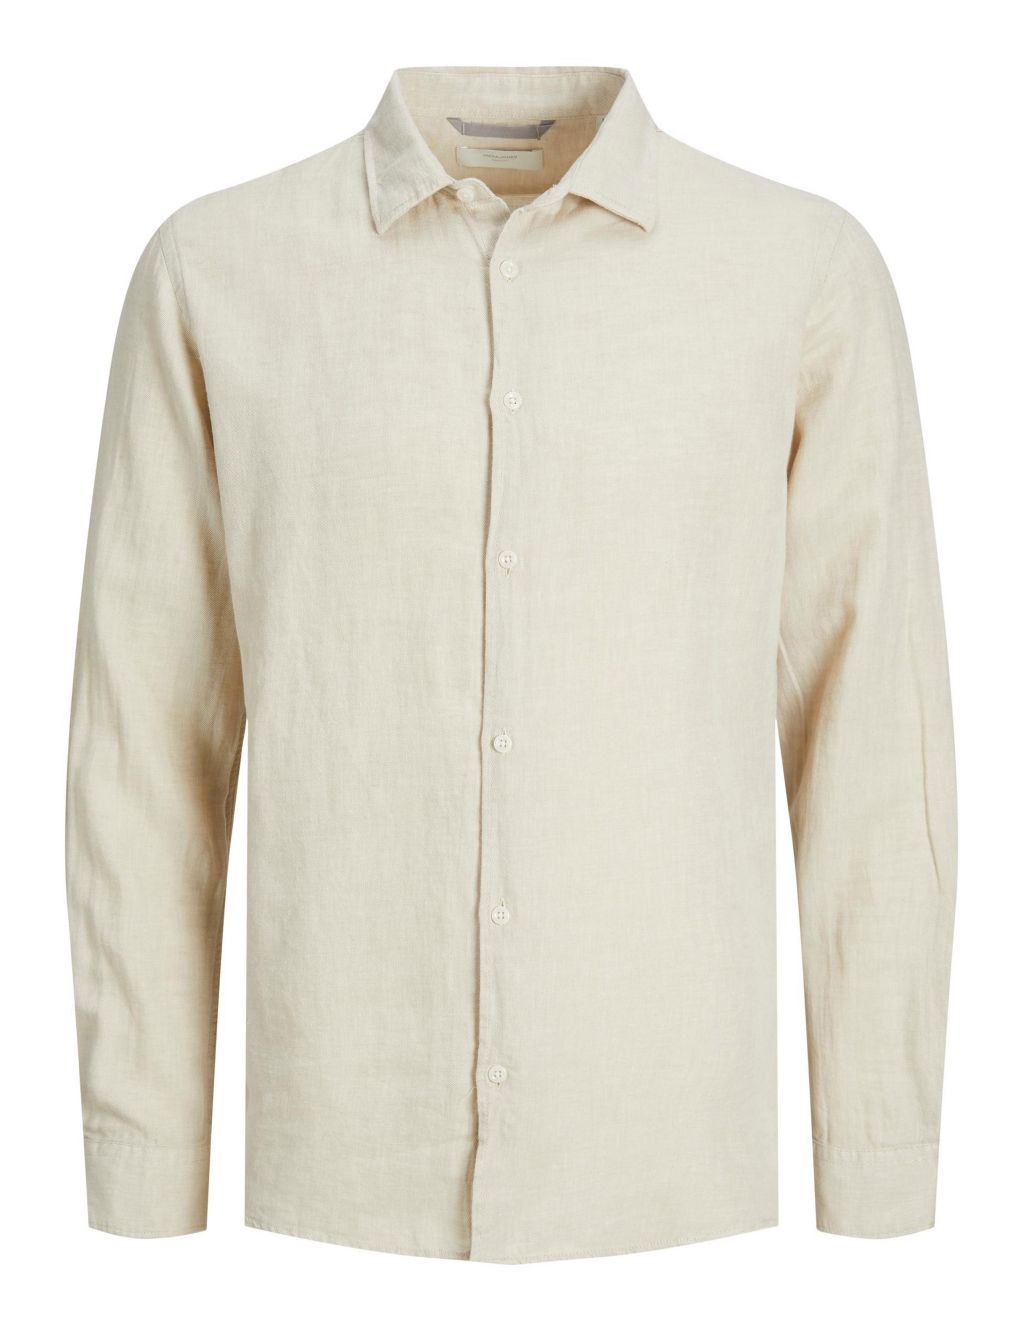 Slim Fit Cotton Blend Oxford Shirt image 2